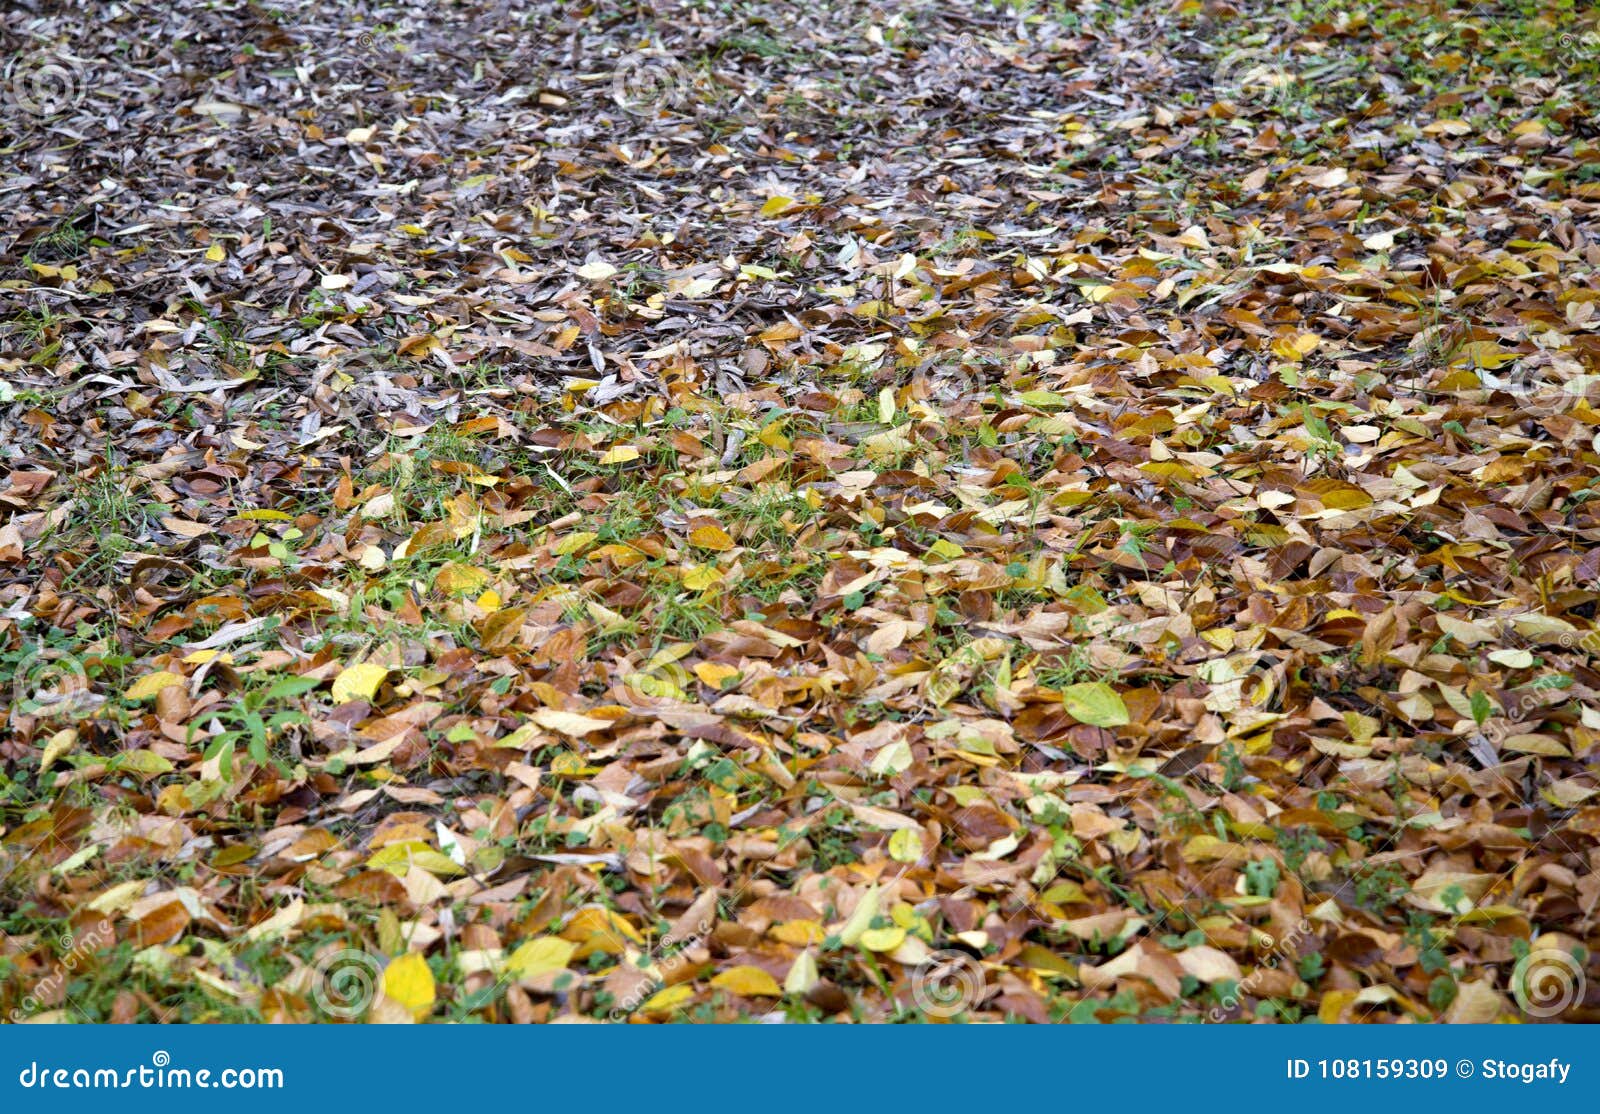 Листья осени на траве. Сцена осени с упаденными листьями на зеленой траве